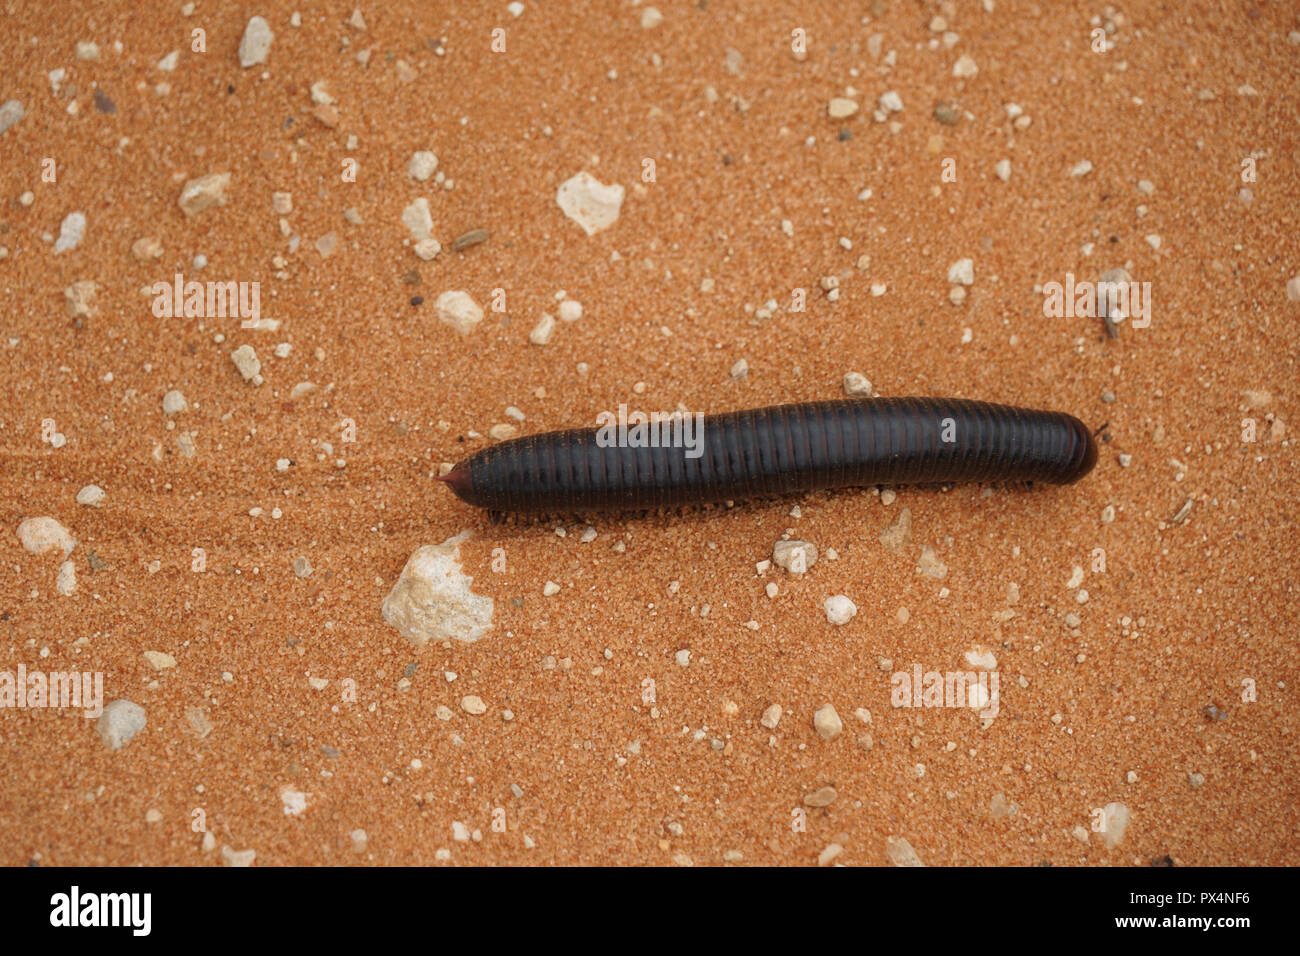 Doppelfüßer (Diplopoda), Tausenfüßer, Namibia, Afrika Stock Photo